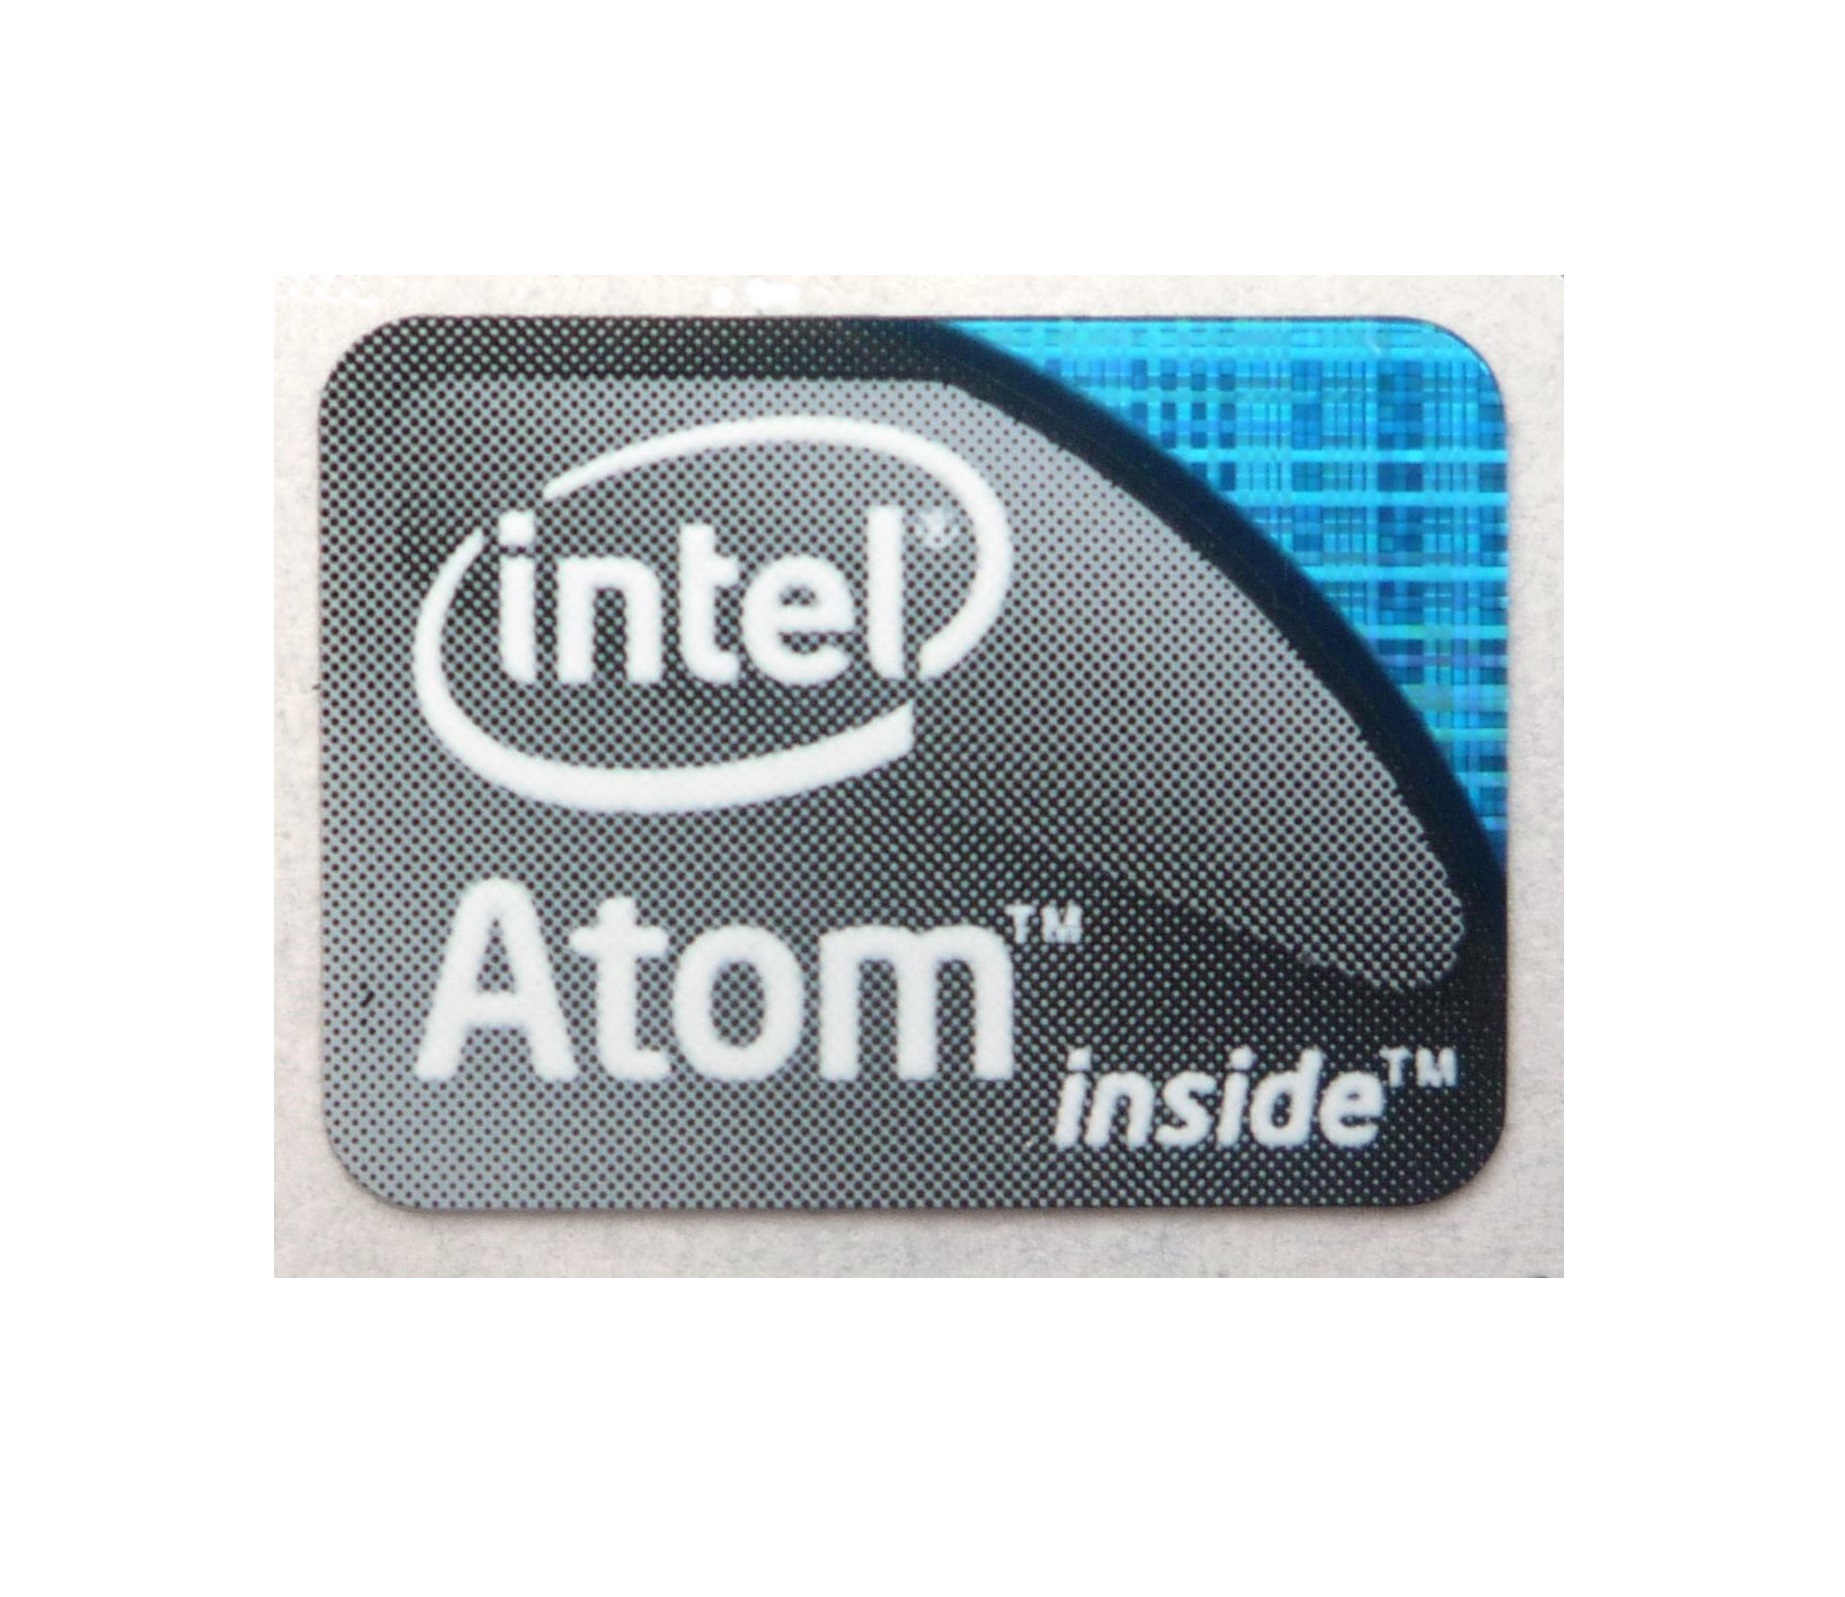 Наклейки intel. Наклейка Intel Atom. Процессор Intel Atom inside. Наклейка Intel Atom x5. Intel inside наклейка.